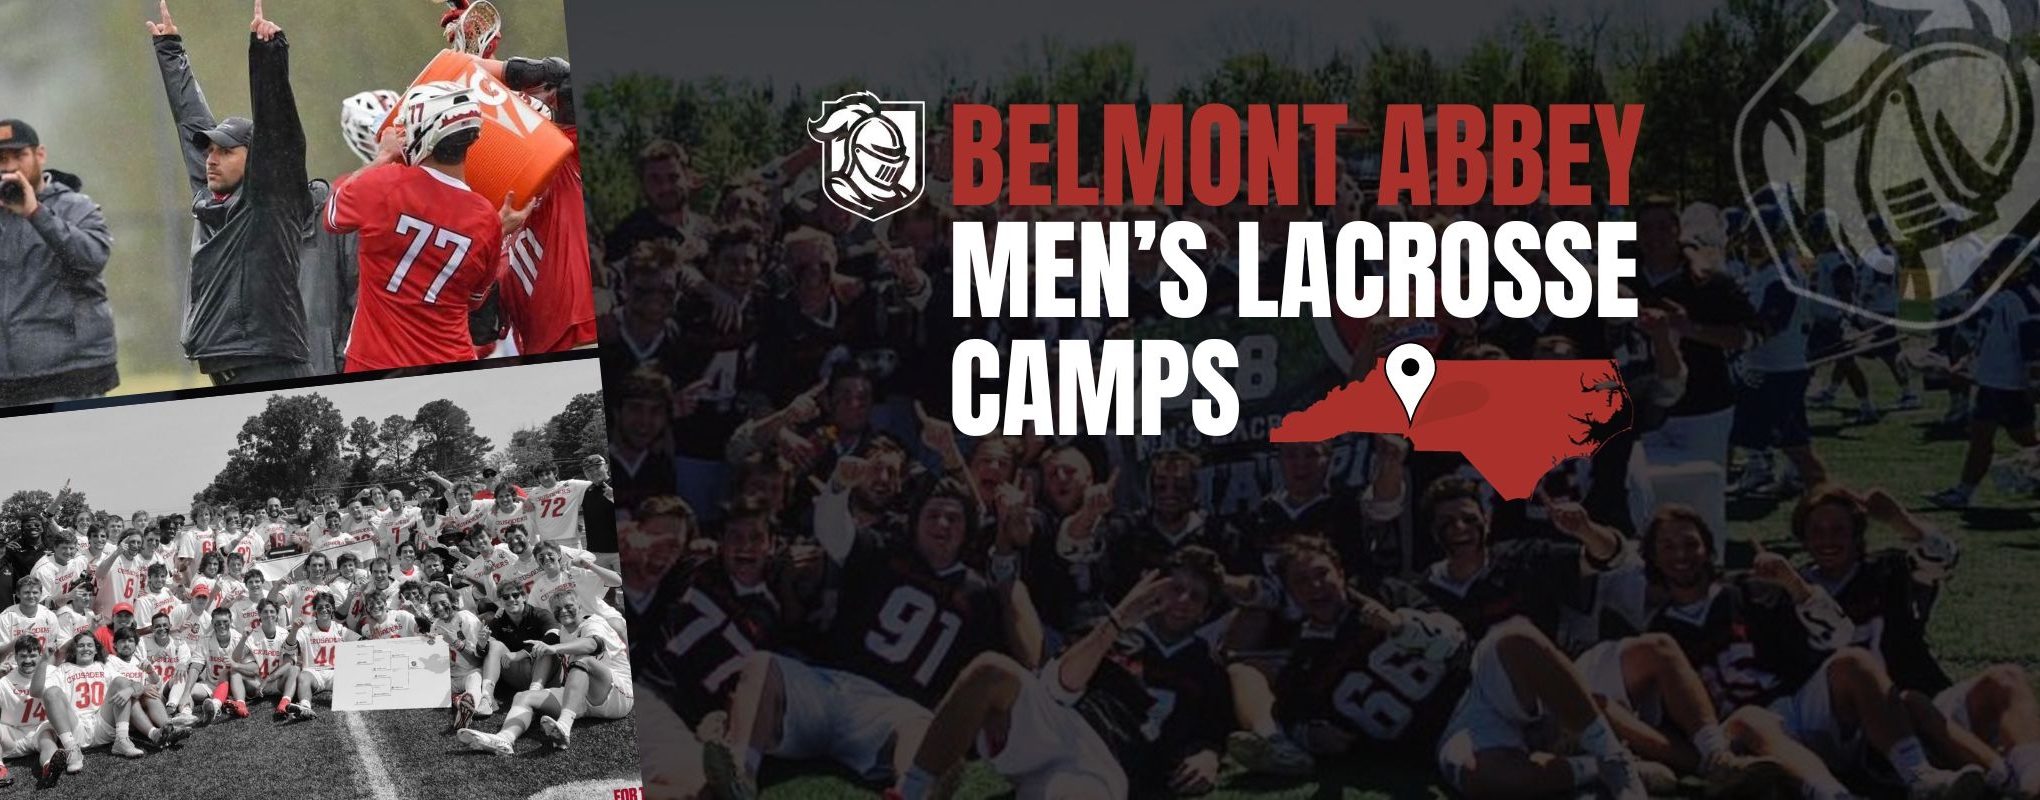 Belmont Abbey Lacrosse Camps